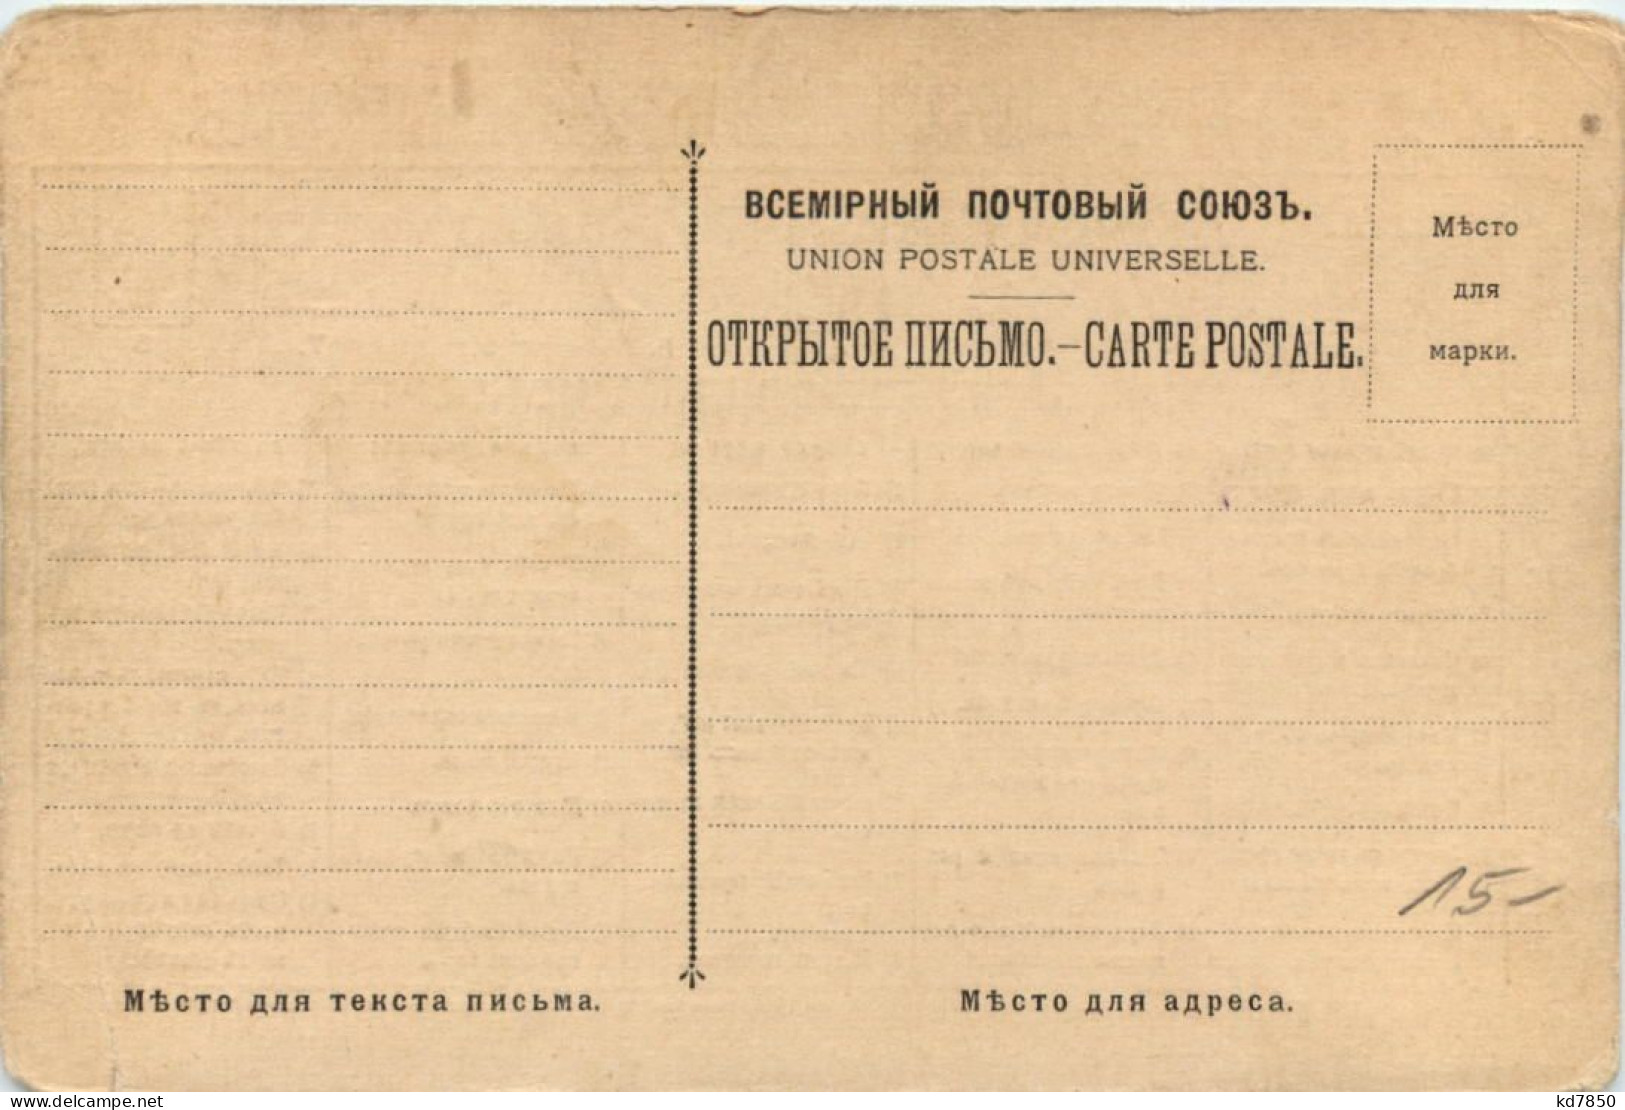 Russia - Breifmarkensprache - Stamps (pictures)